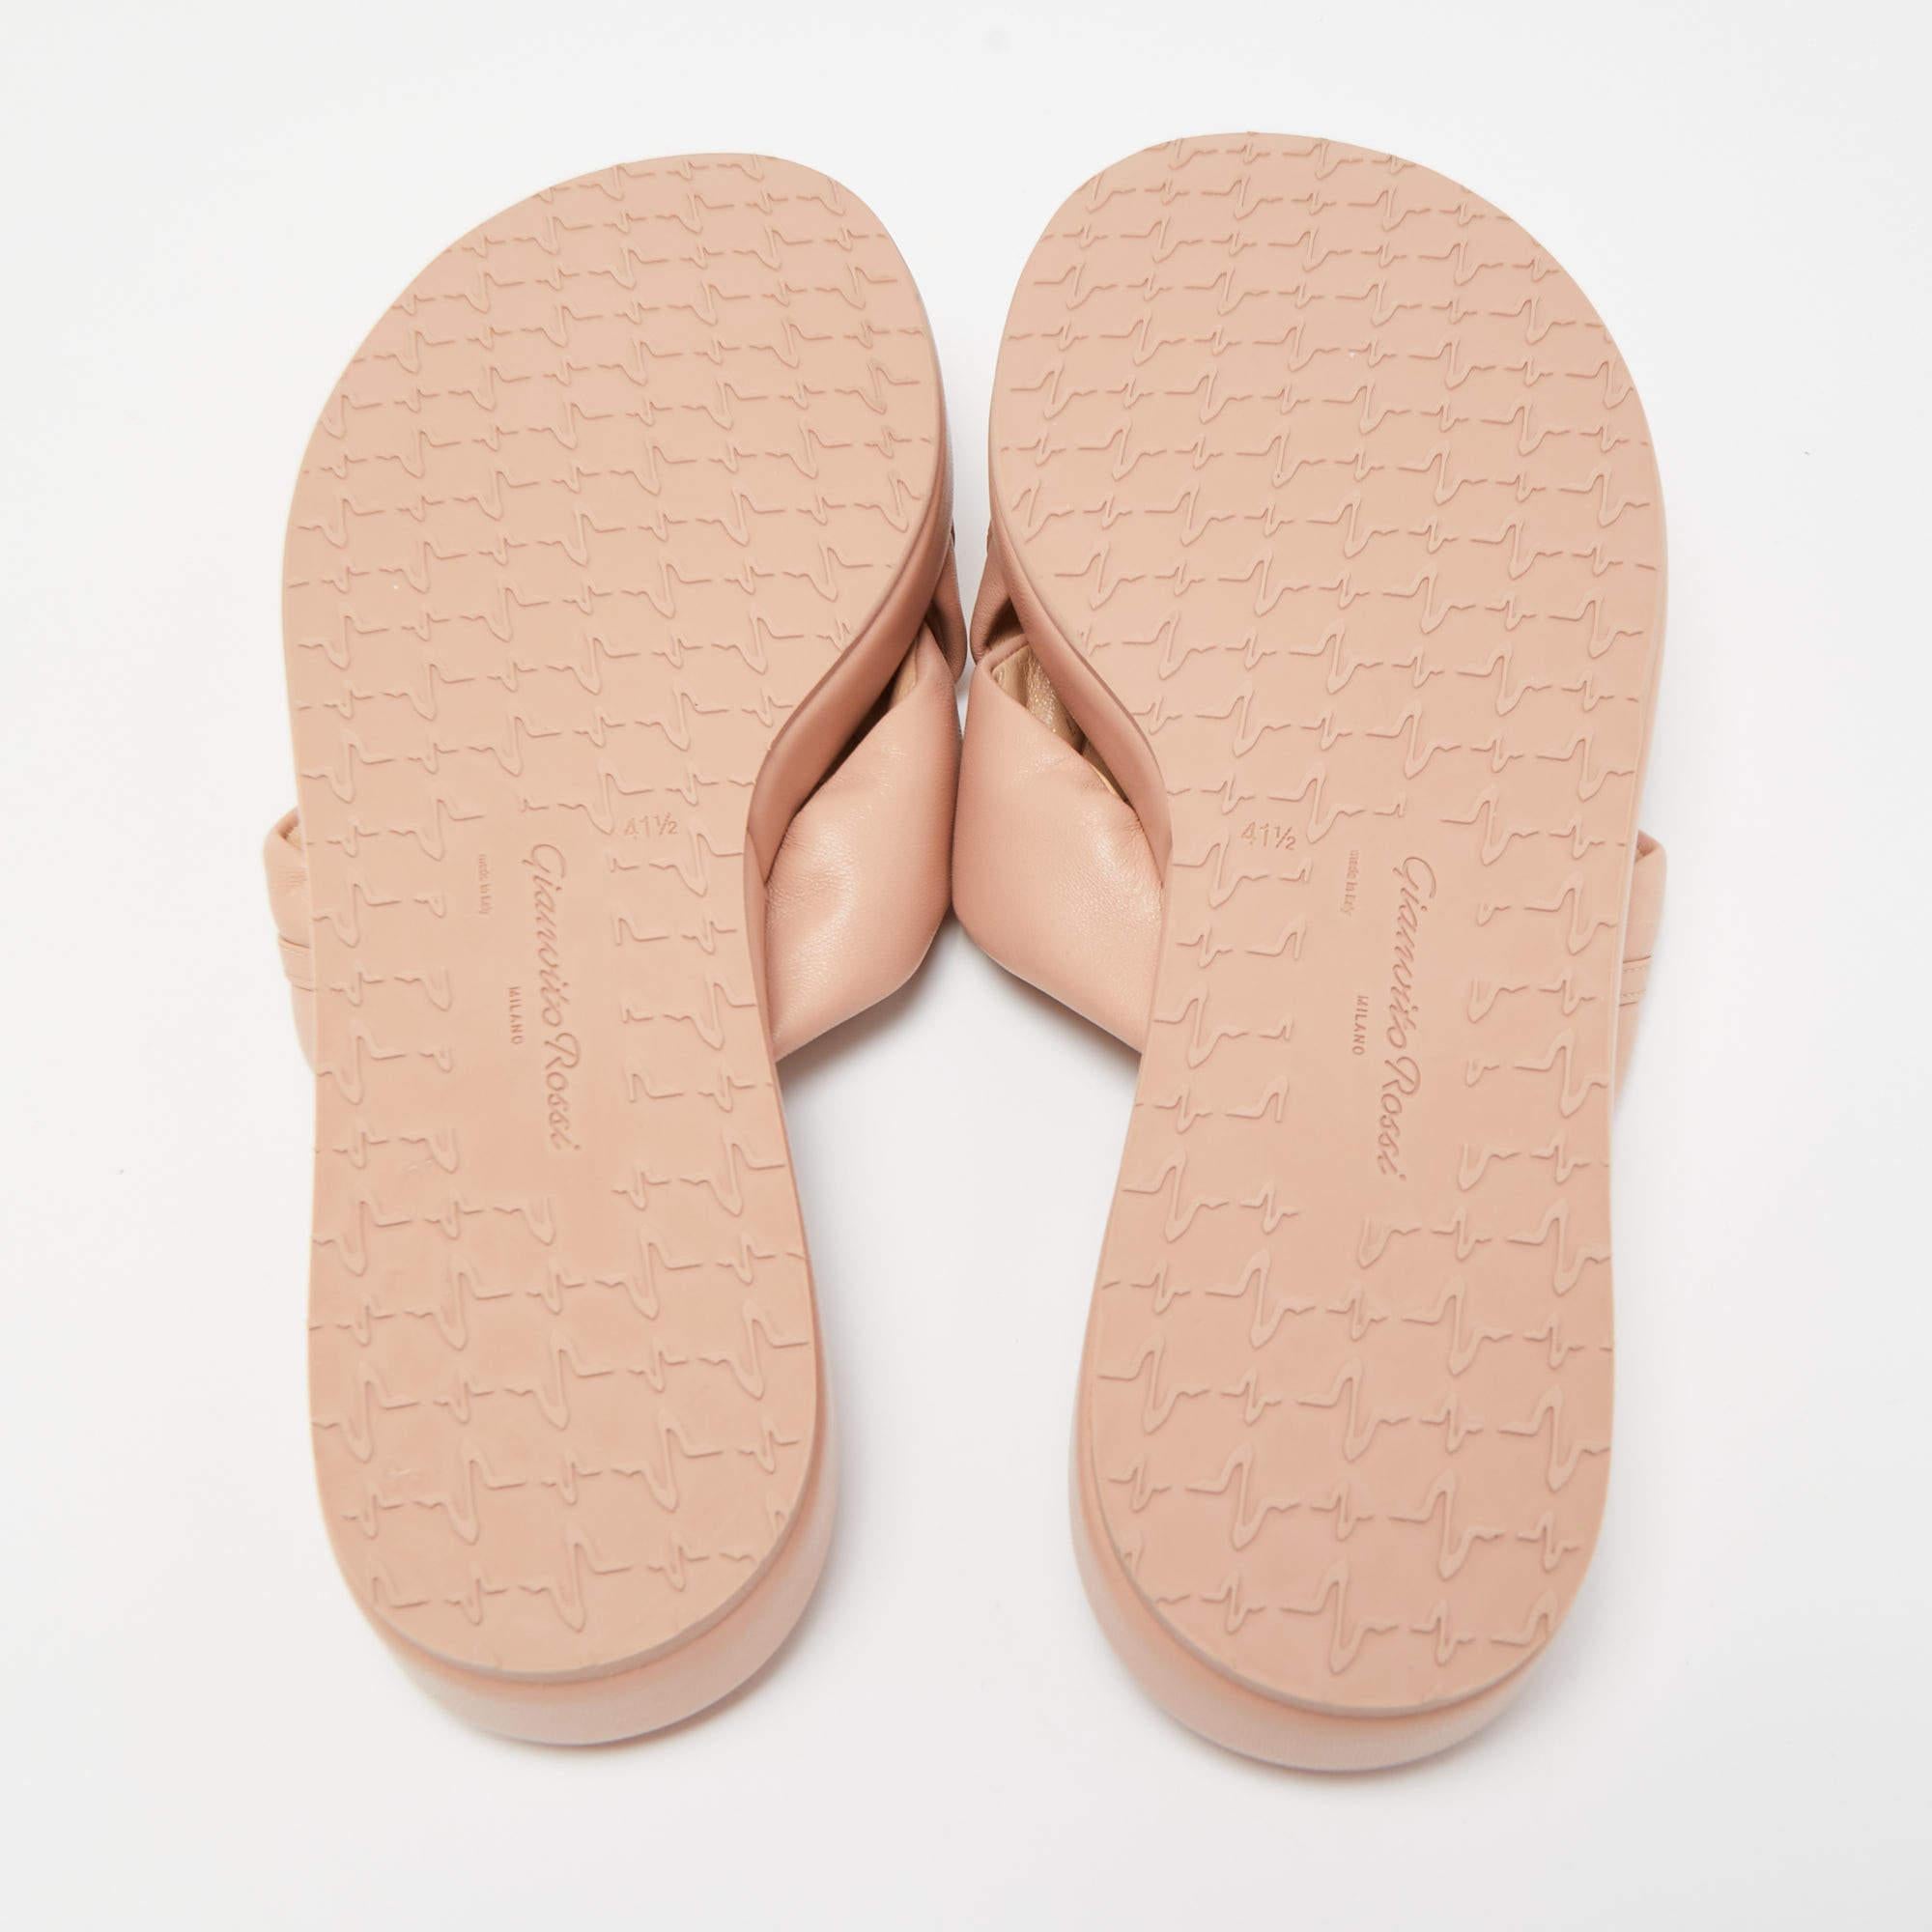 Gianvito Rossi Beige Leather Flatofrm Slide Sandals Size 41.5 4